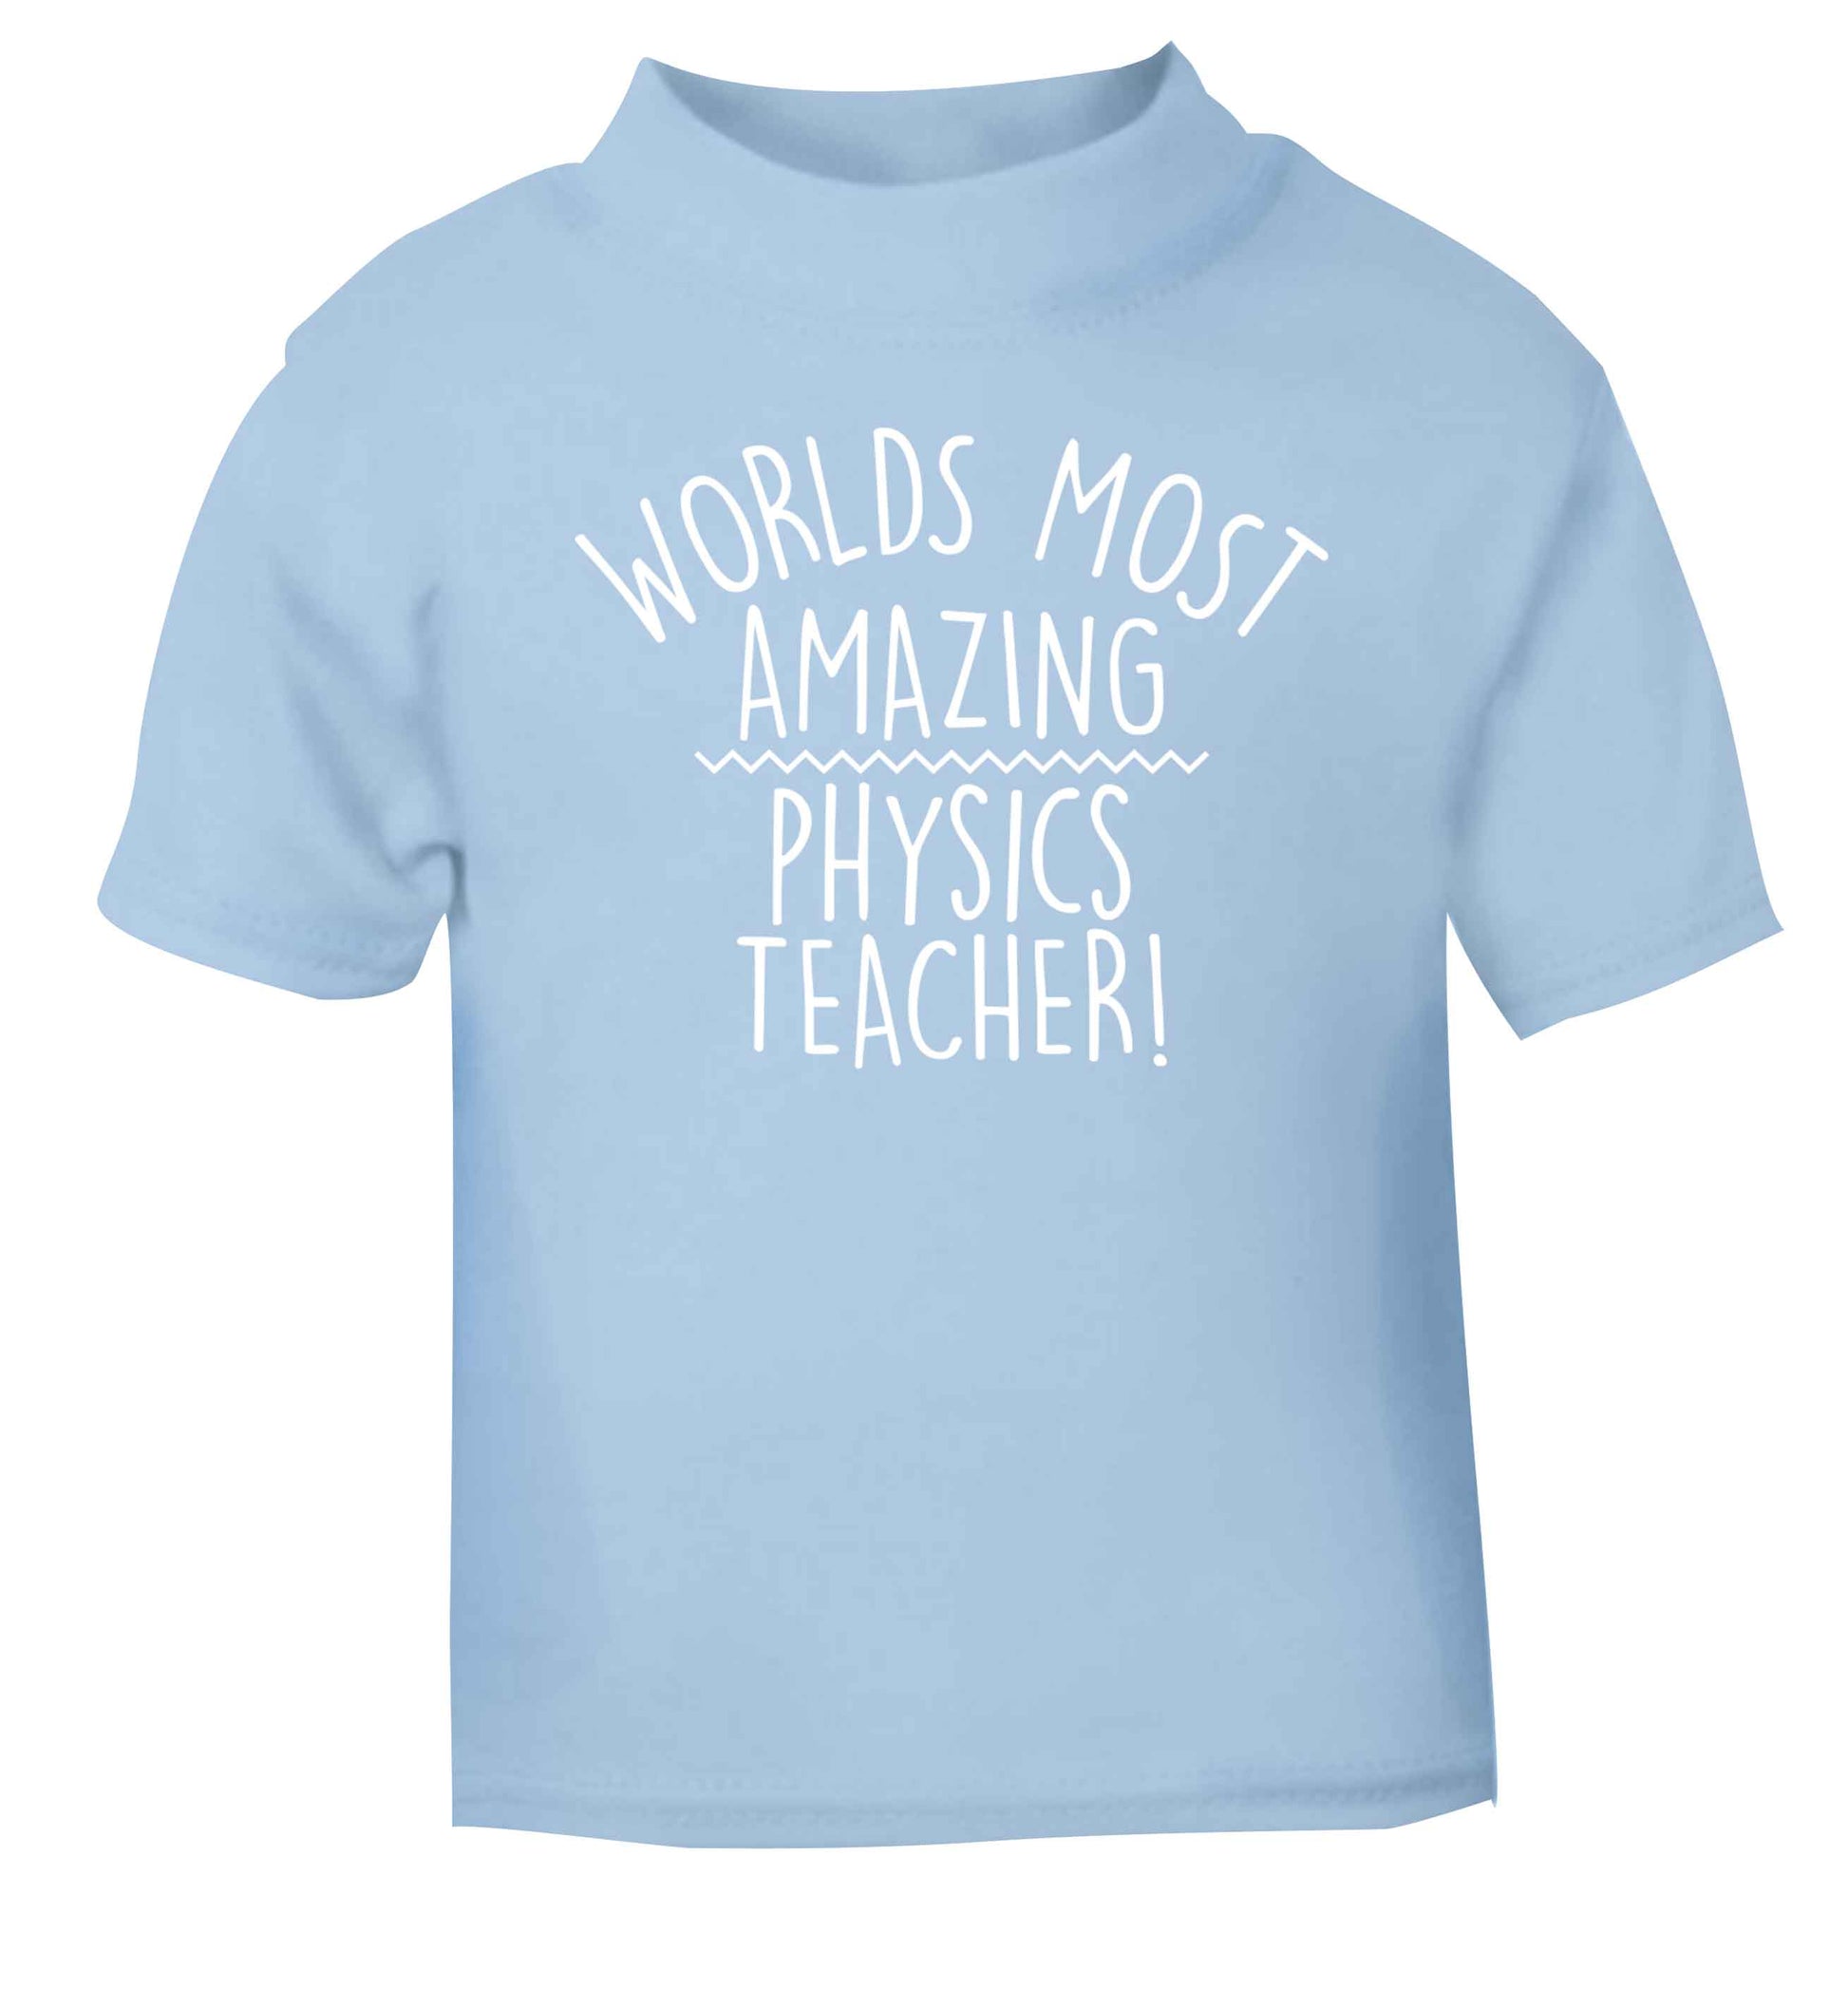 Worlds most amazing physics teacher light blue baby toddler Tshirt 2 Years